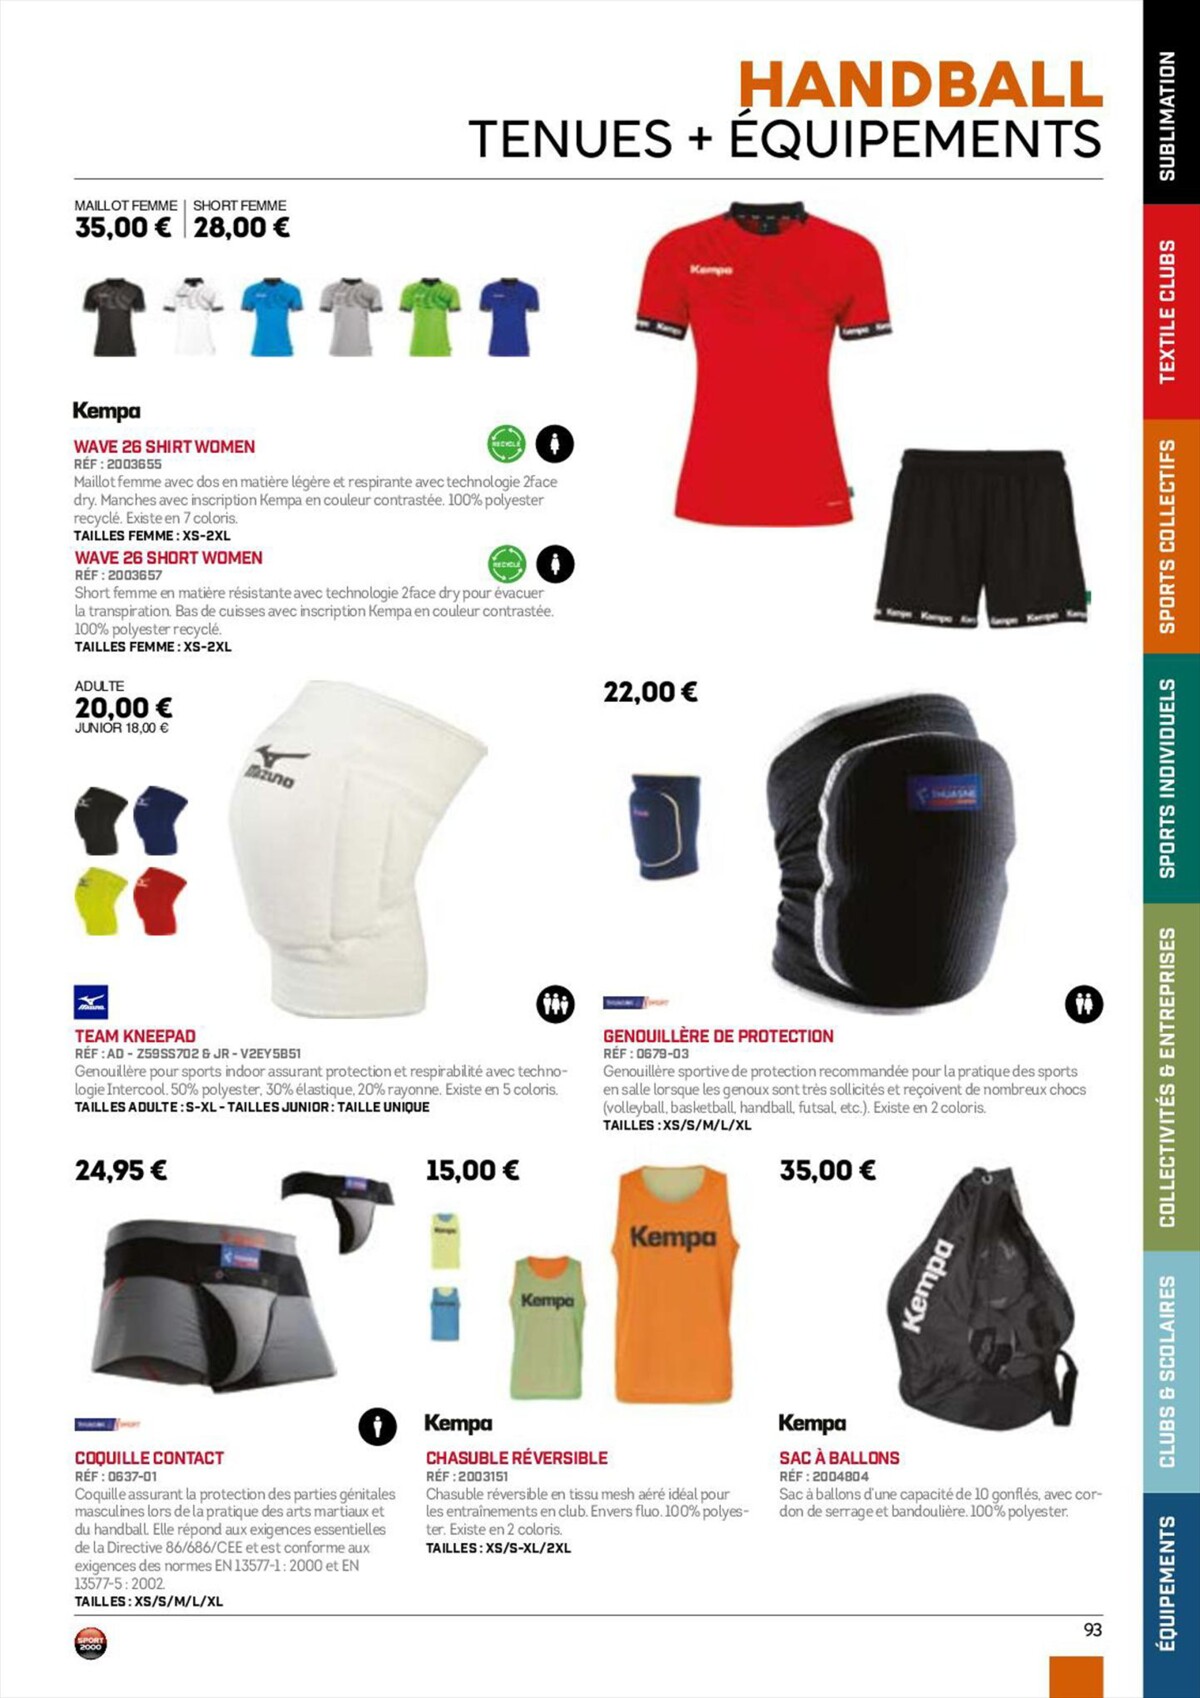 Catalogue Catalogue Sport 2000, page 00093